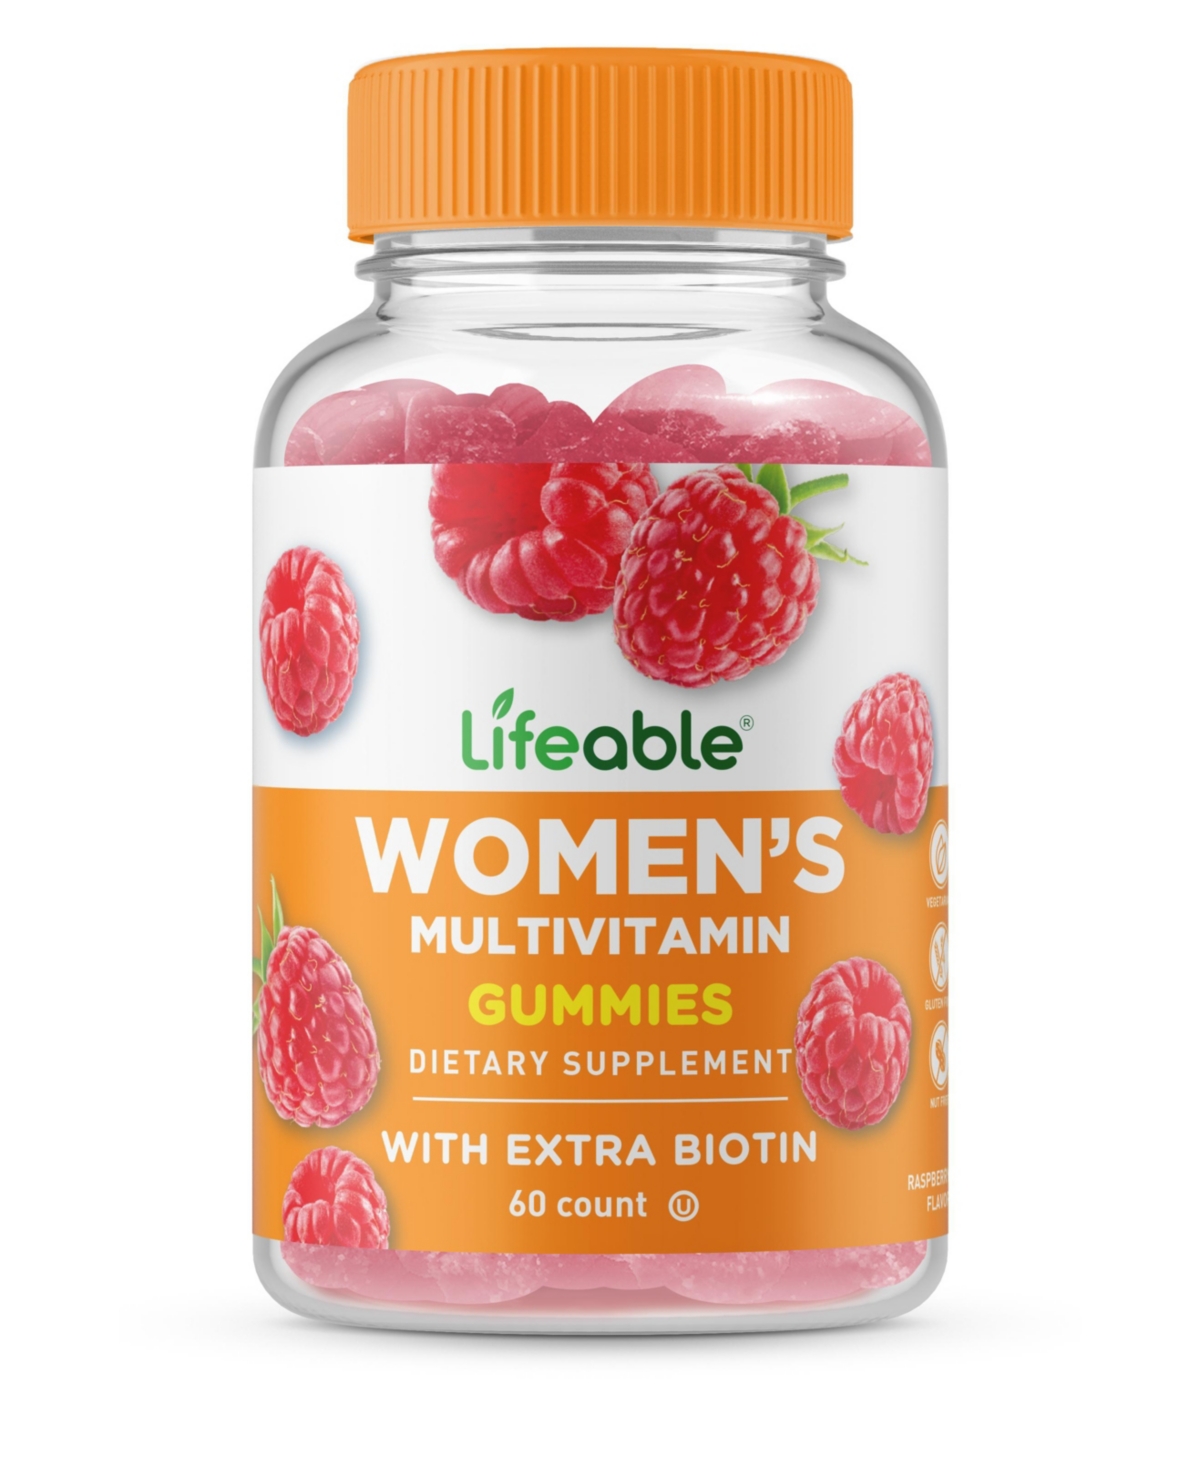 Multivitamin for Women Gummies - Immunity, Digestion, Bones, Skin - Great Tasting Natural Flavor, Dietary Supplement Vitamins - 60 Gummies